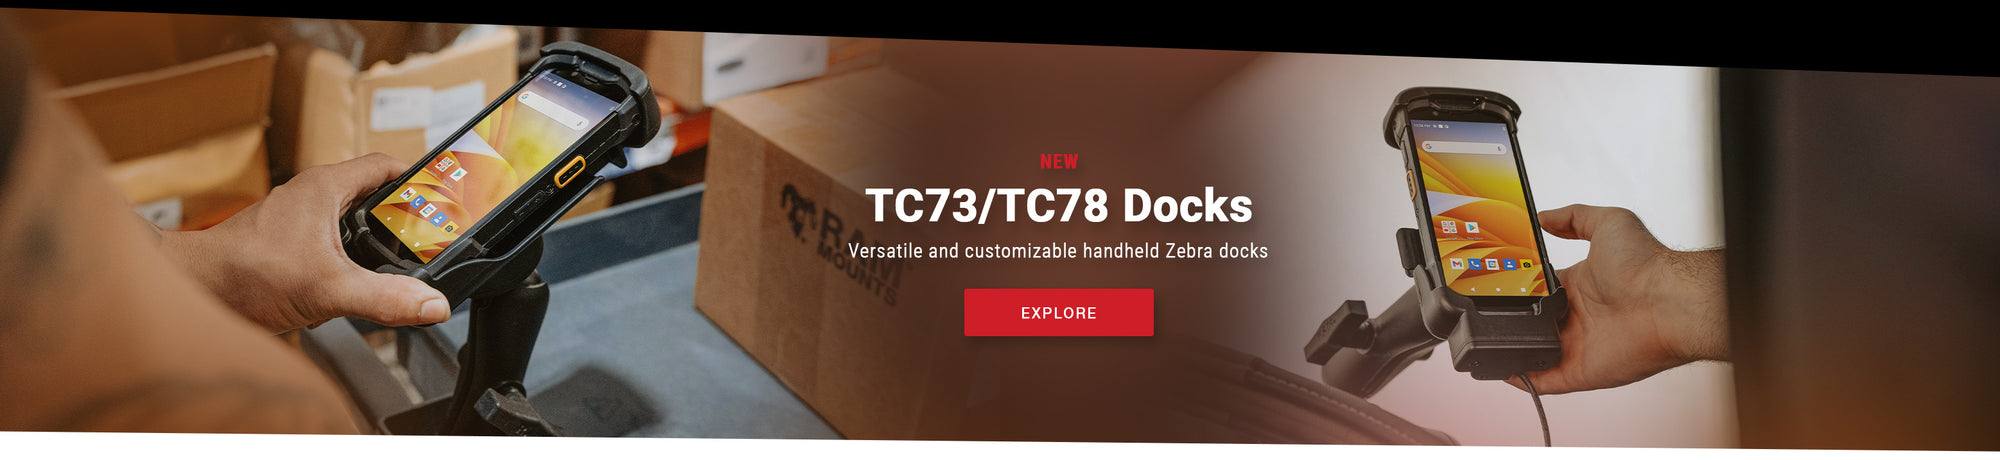 New Mobile Homepage Banner for Zebra TC73/TC78 RAM Docks and Mounts